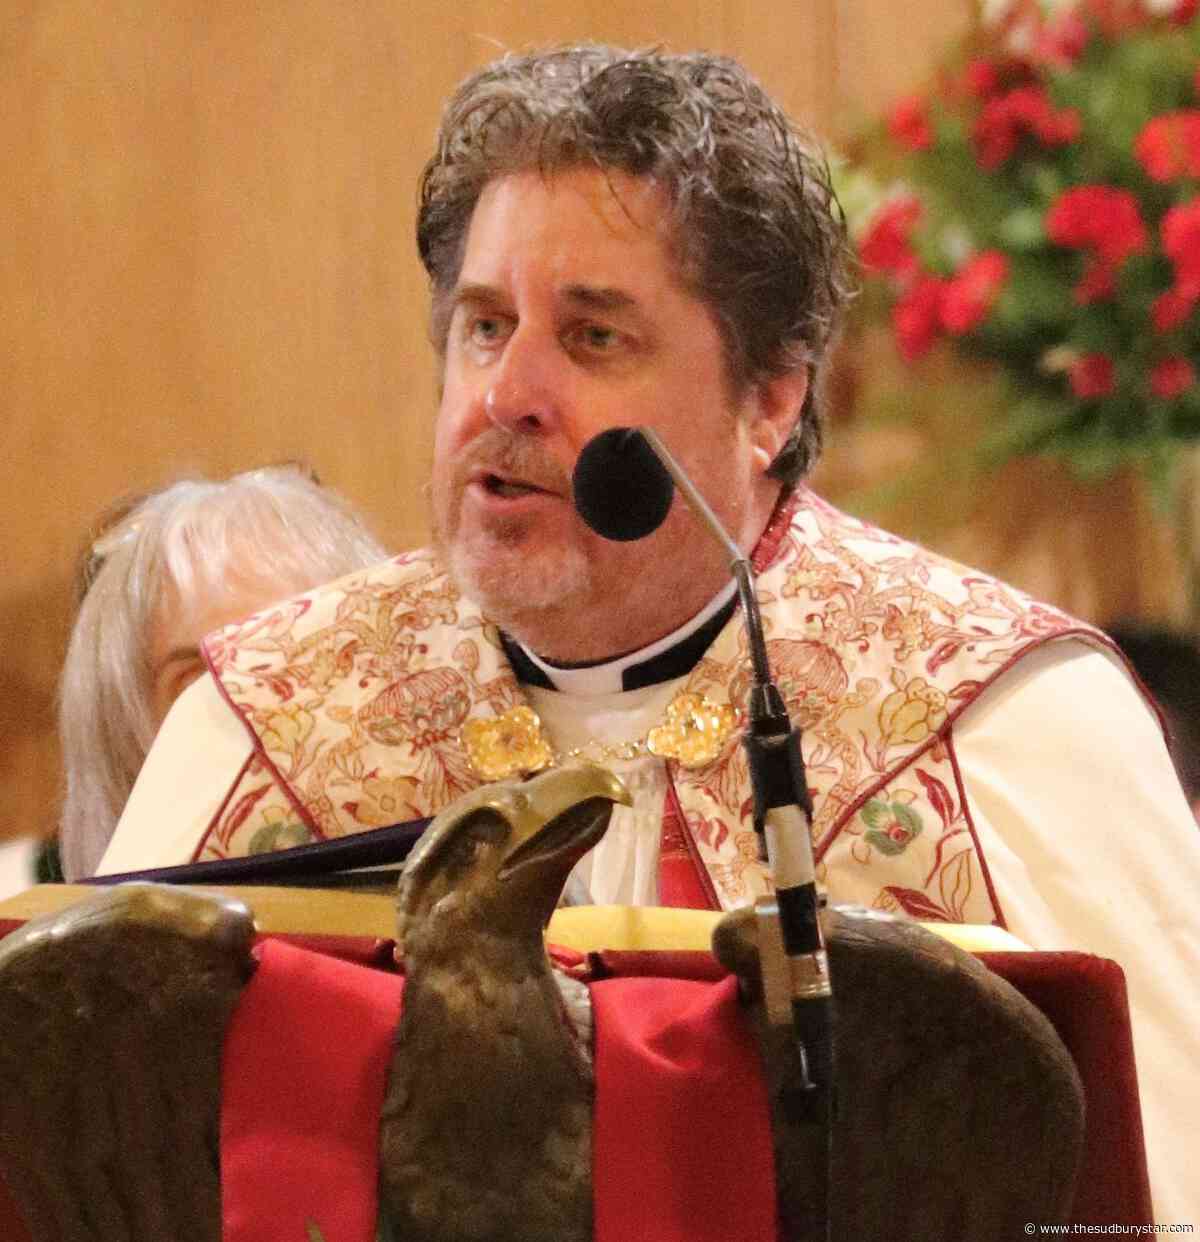 Sault priest new provost of Thorneloe University in Sudbury